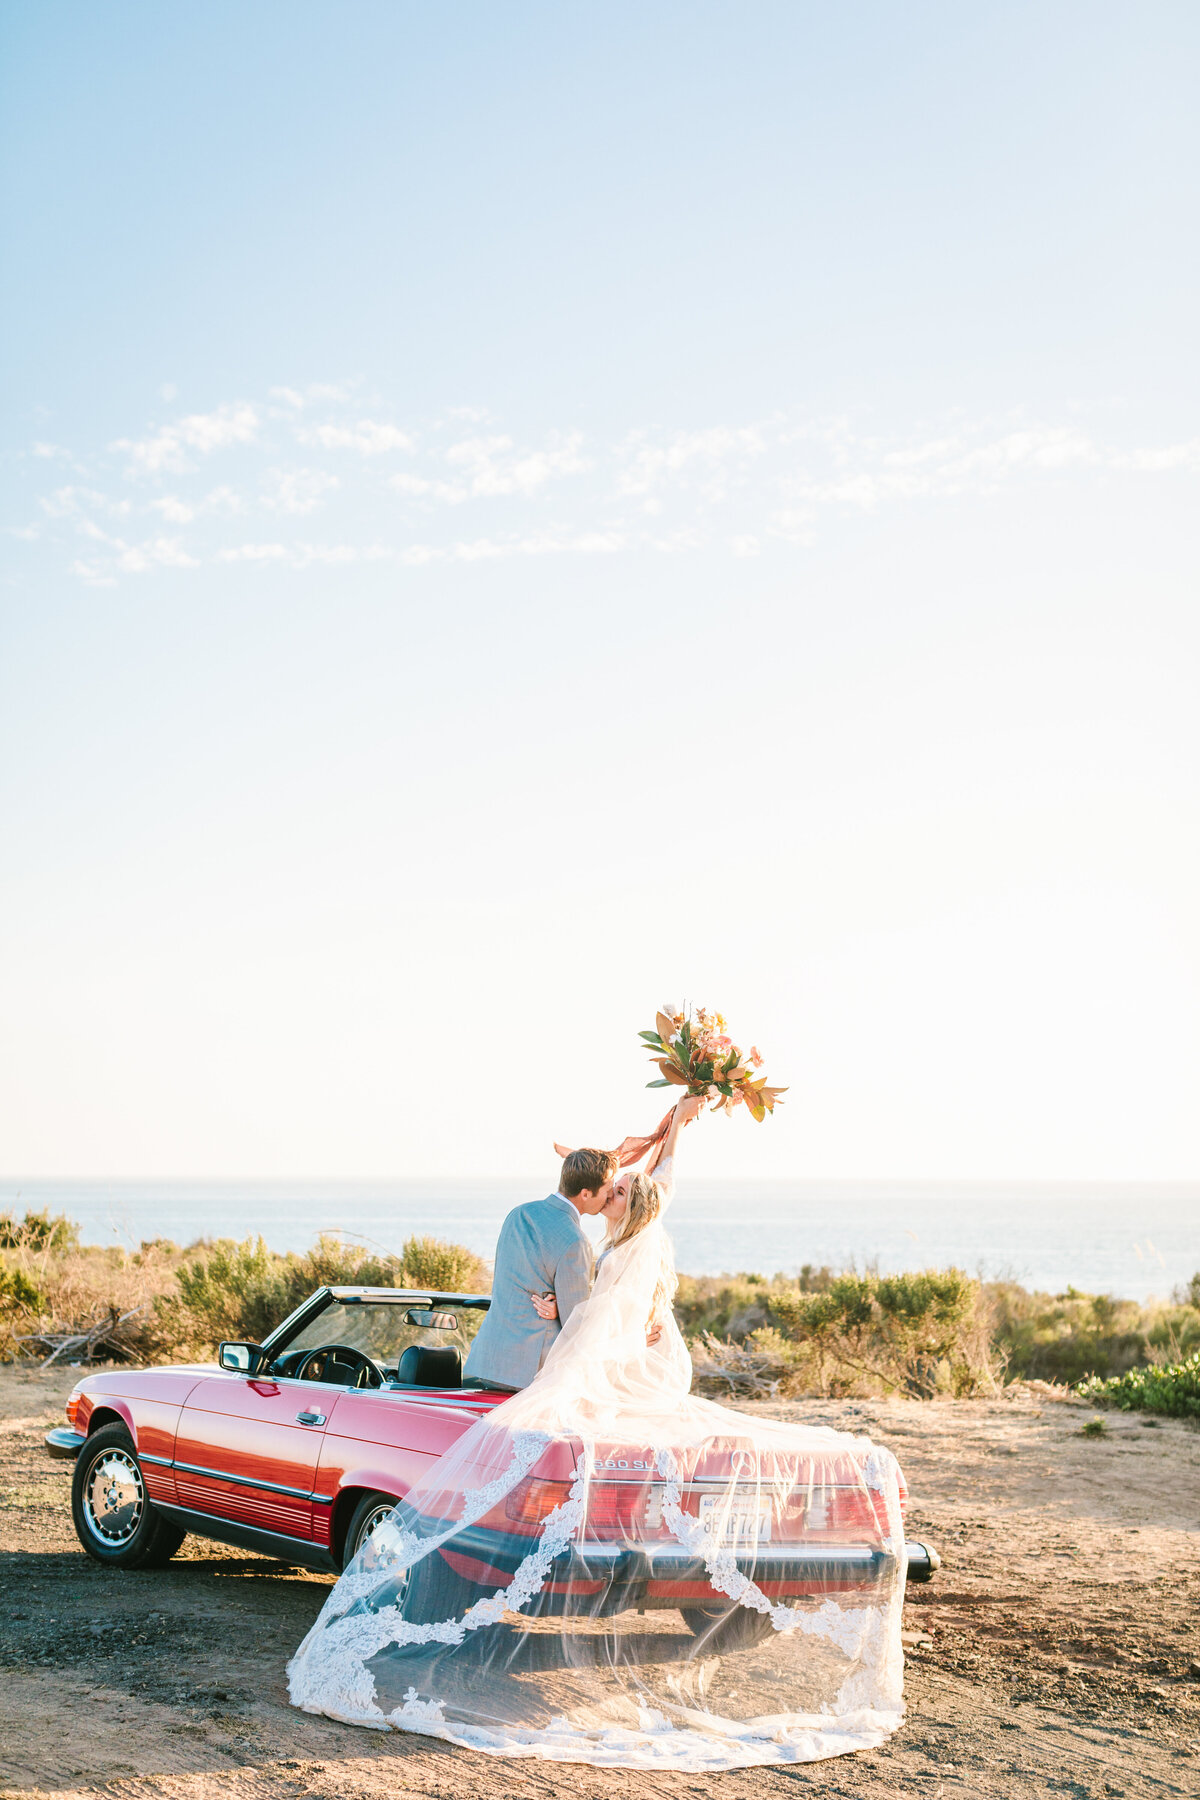 Best California and Texas Wedding Photographer-Jodee Friday & Co-274